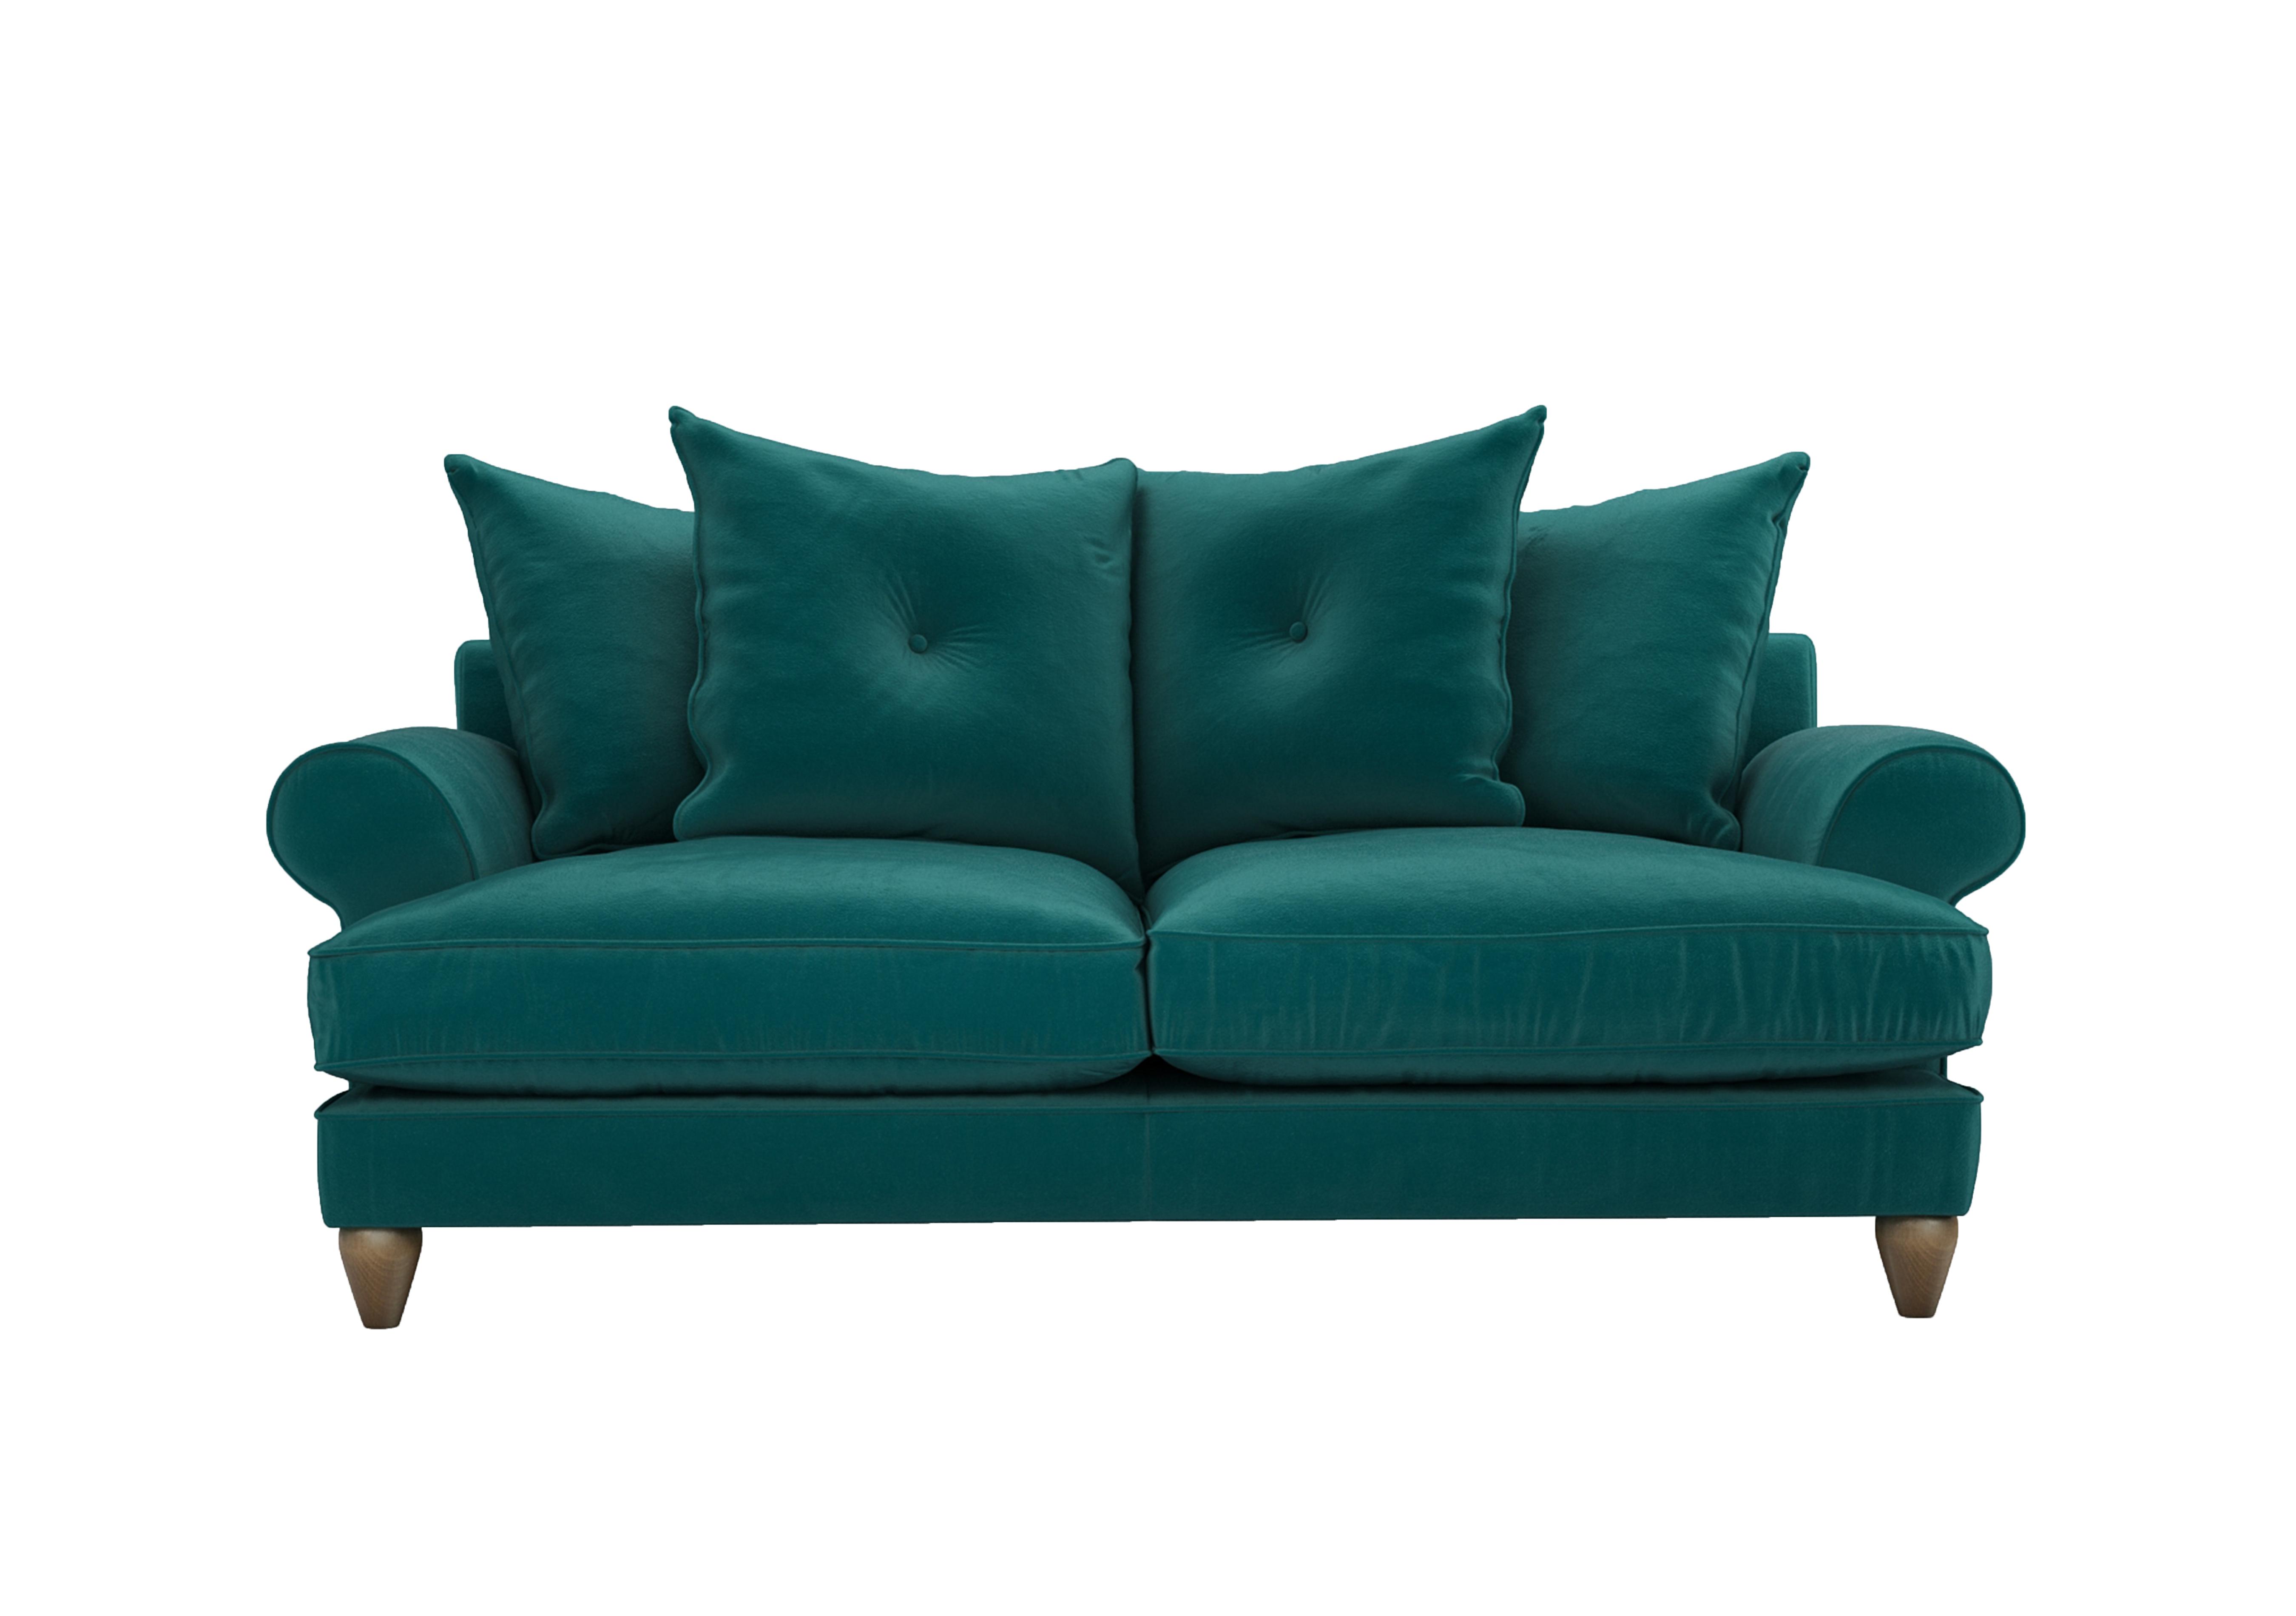 Bronwyn 3 Seater Fabric Scatter Back Sofa in Dra008 Dragoneye on Furniture Village